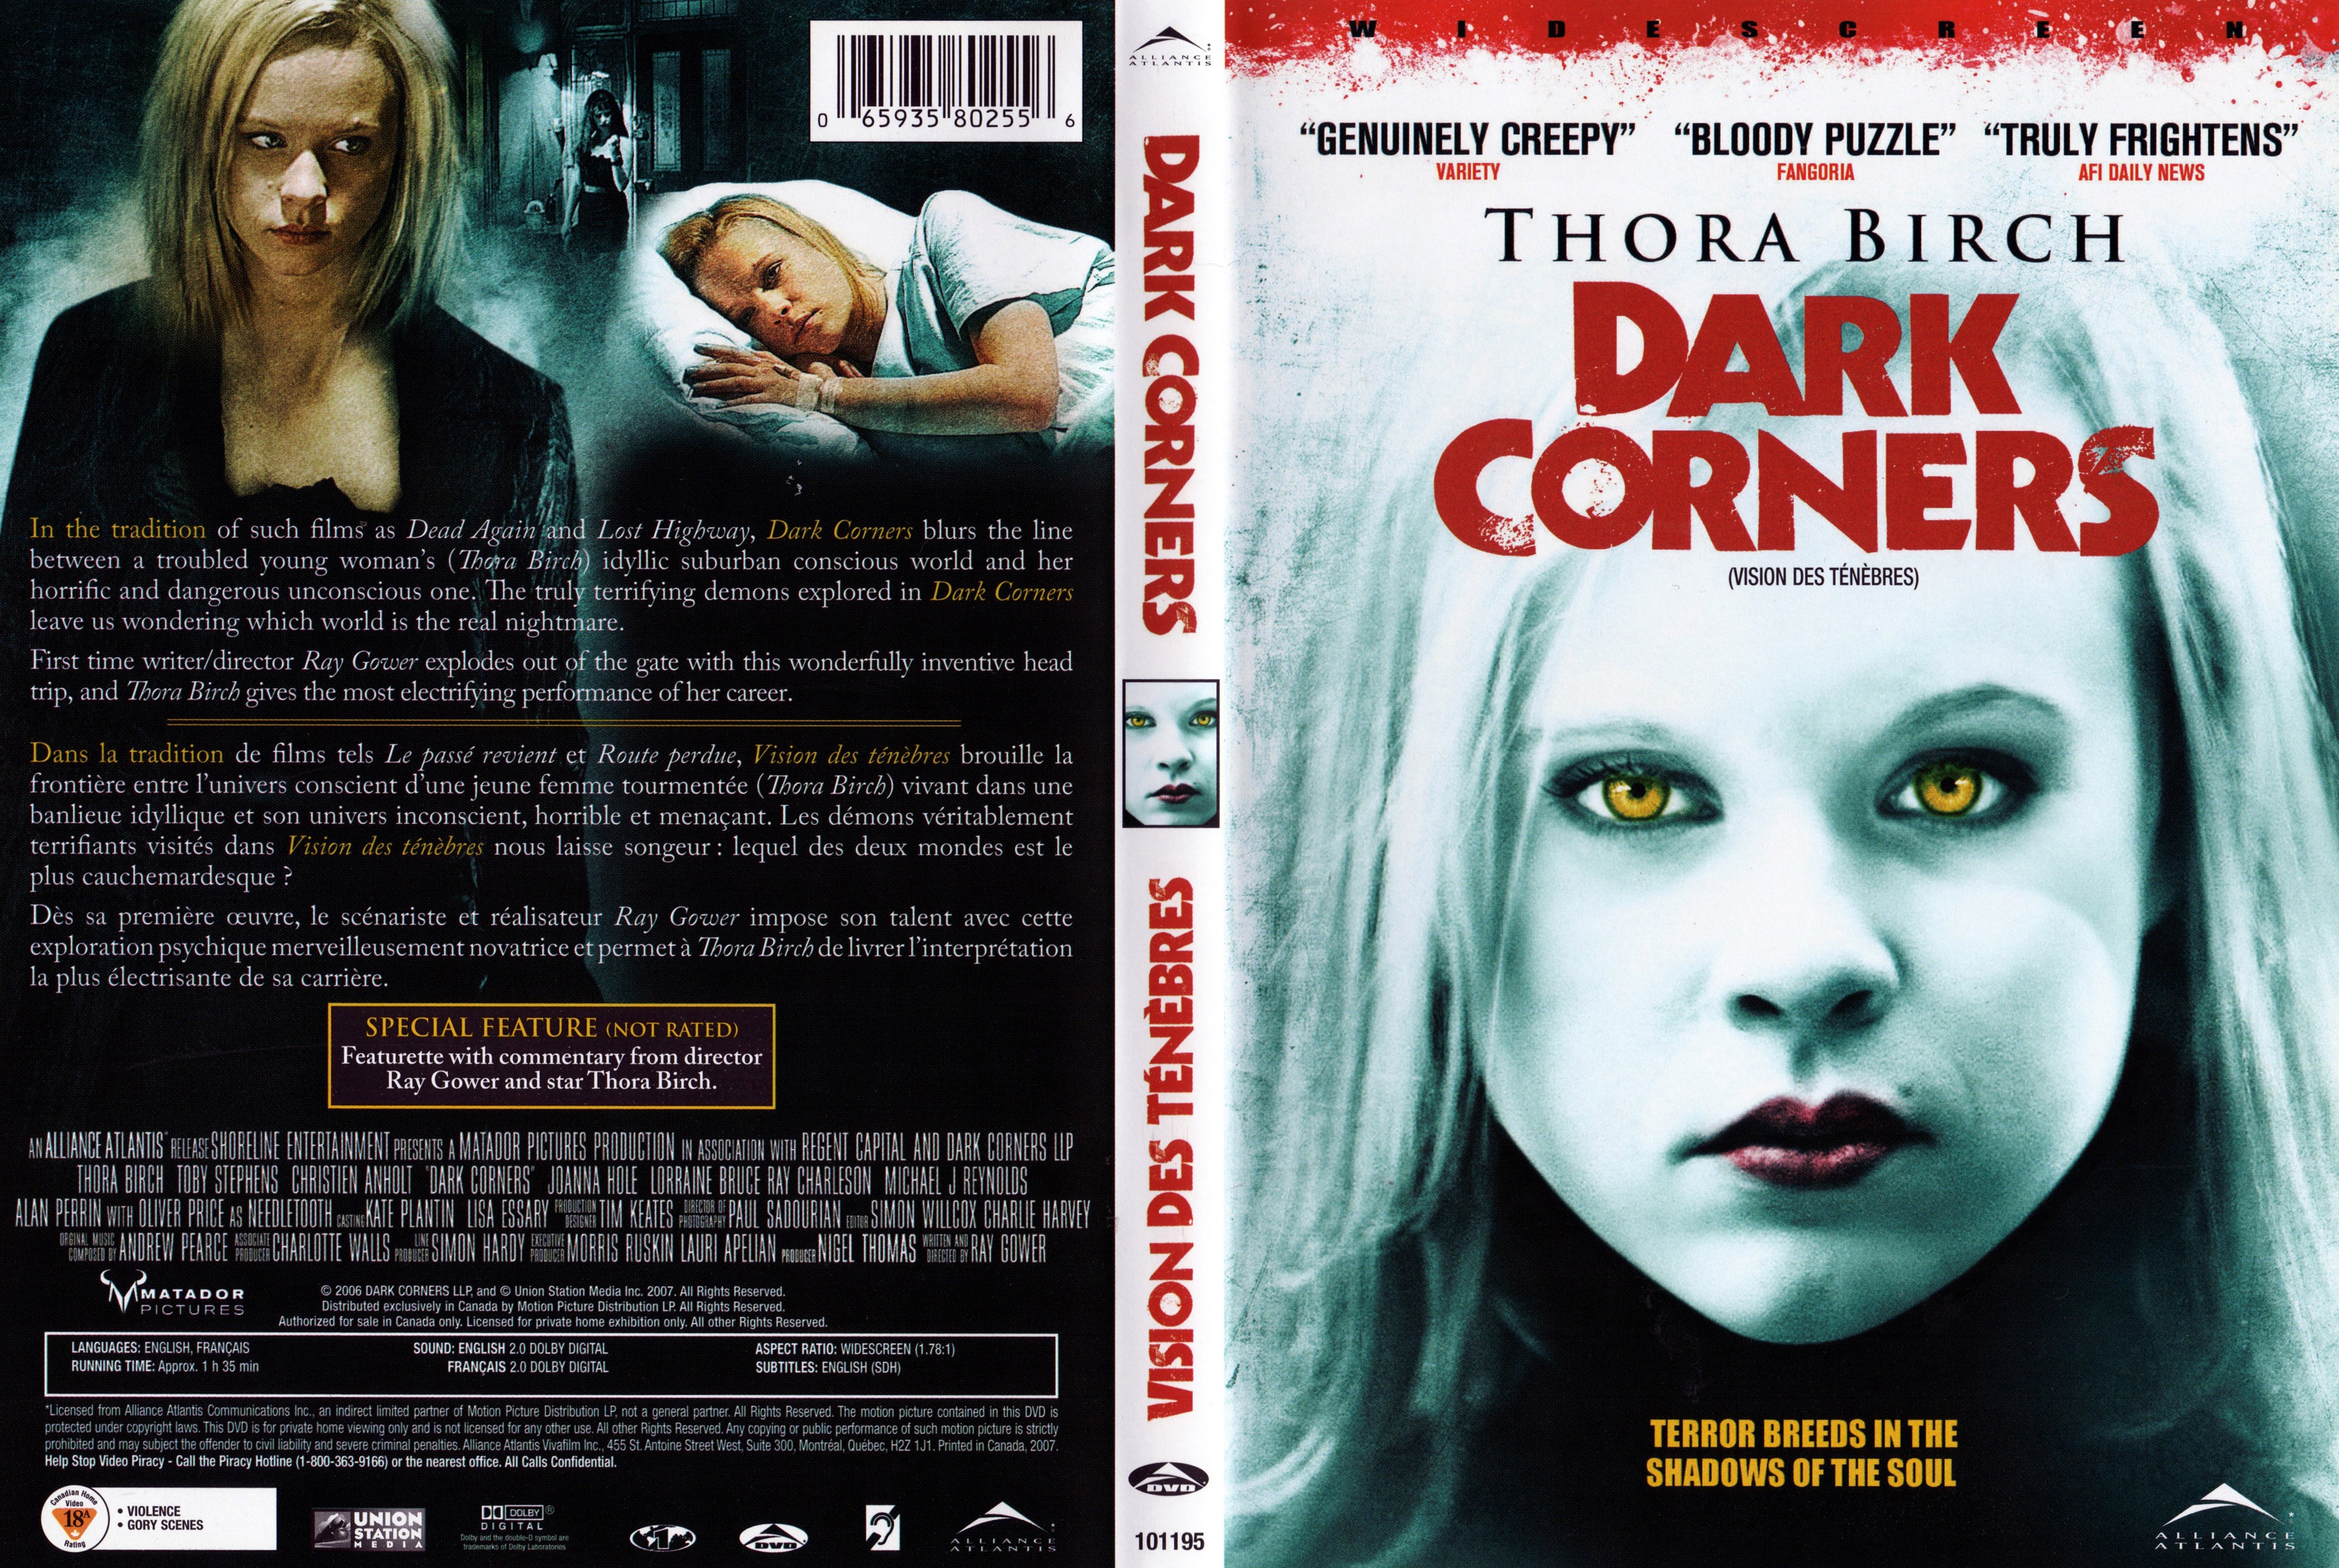 Jaquette DVD Dark corners - Vision des tenebres